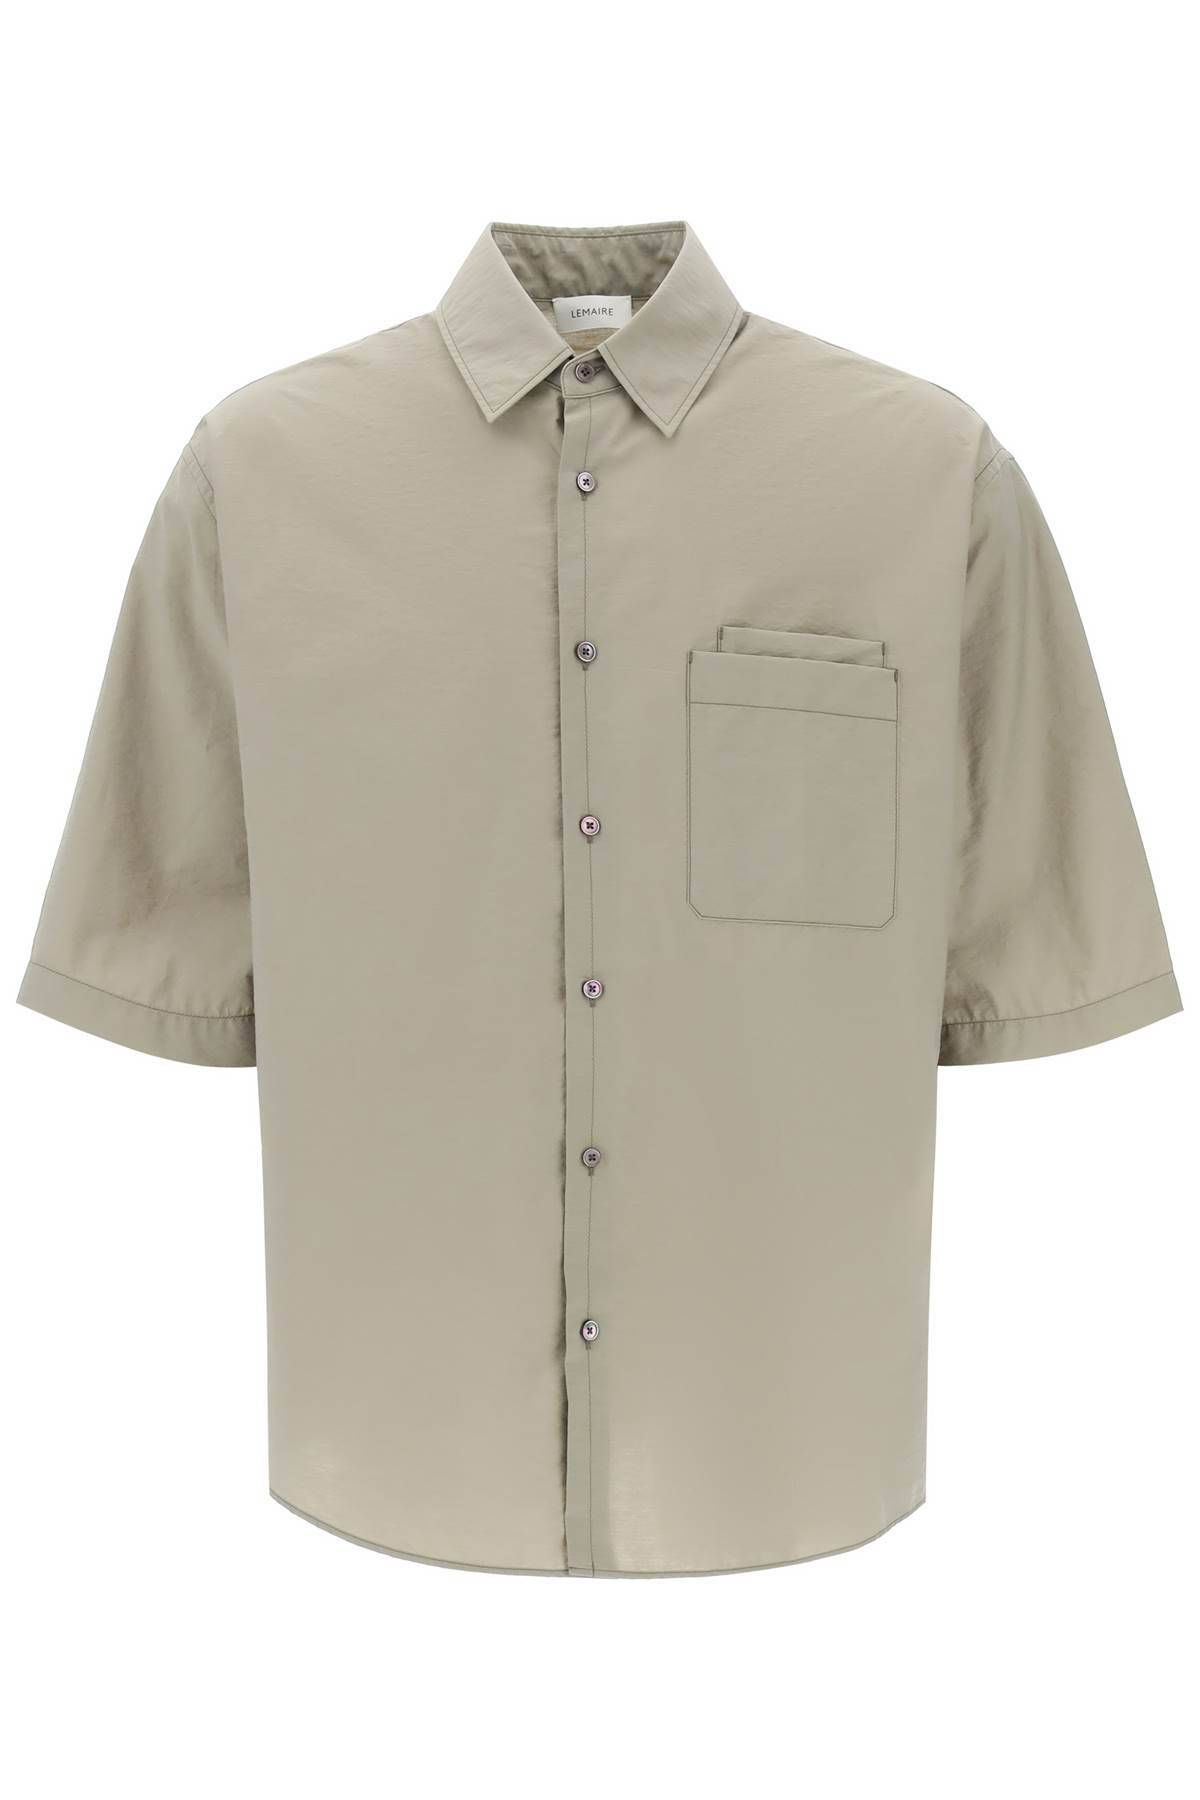 Lemaire LEMAIRE short-sleeved cotton fluid shirt